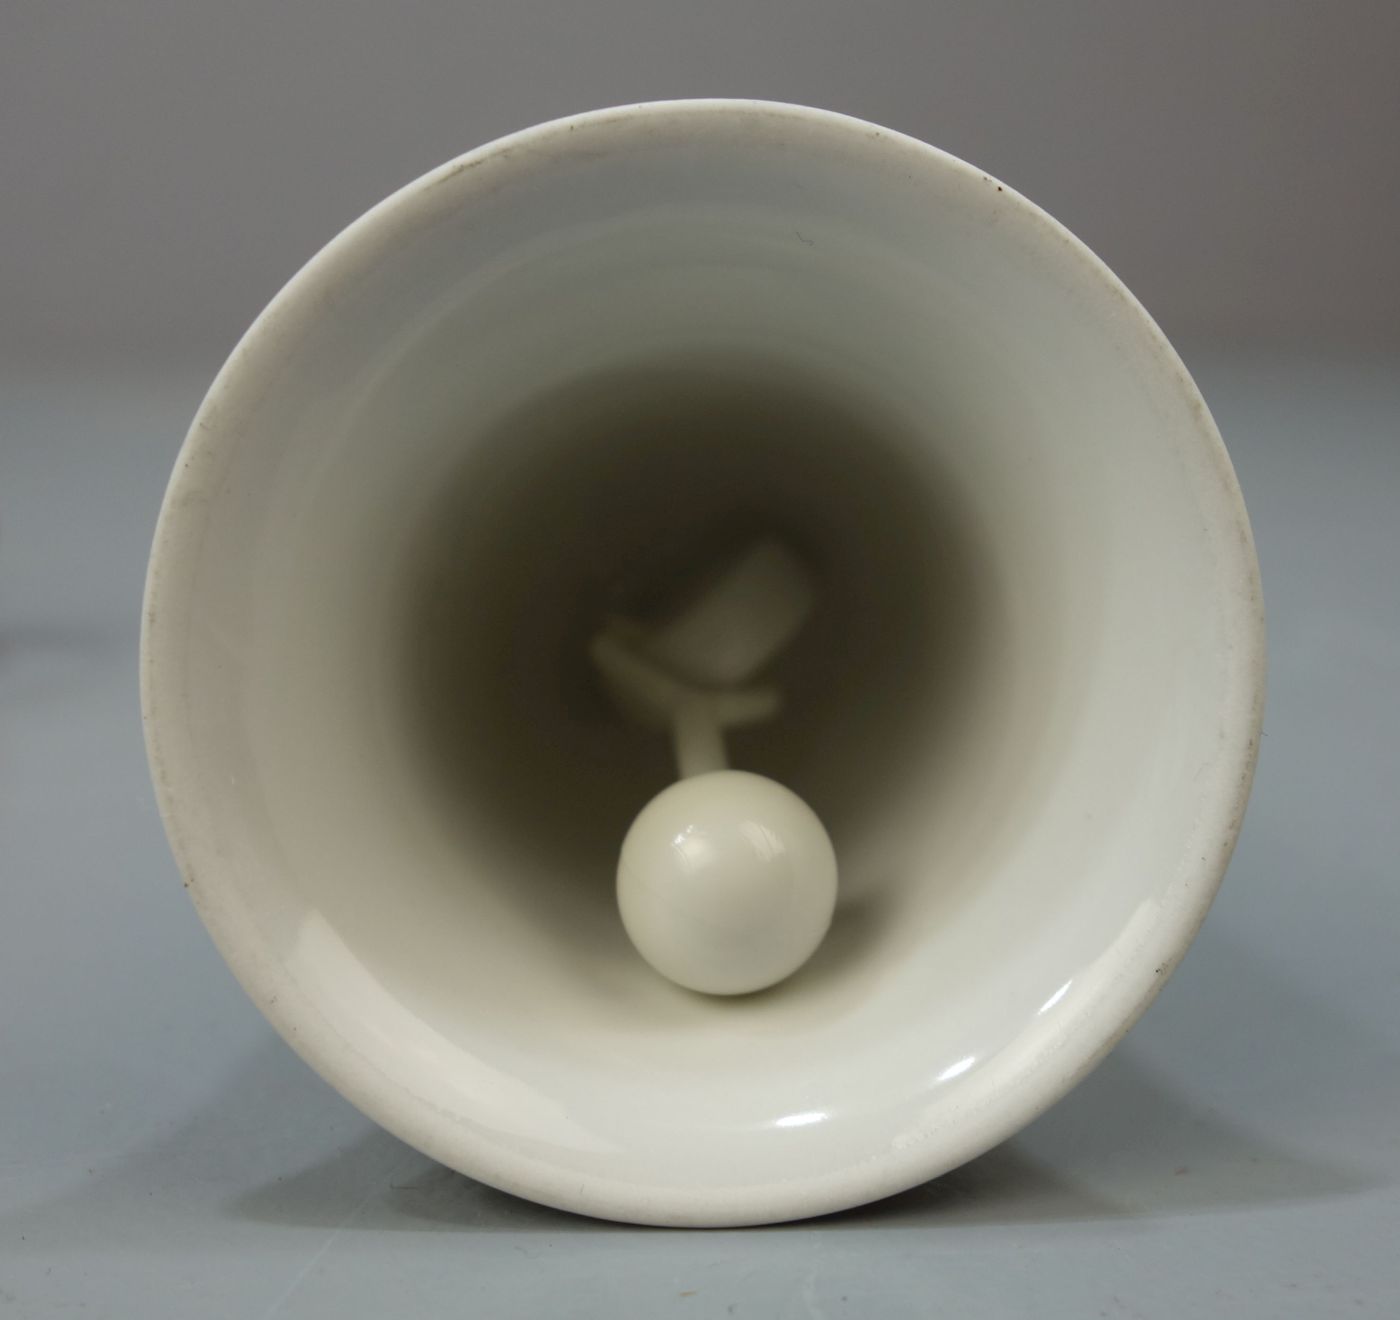 PORZELLANGLOCKEN "OSNABRÜCK" / porcelain bells, 4 Stück, Hutschenreuther Porzellanmanufaktur. - Image 3 of 3